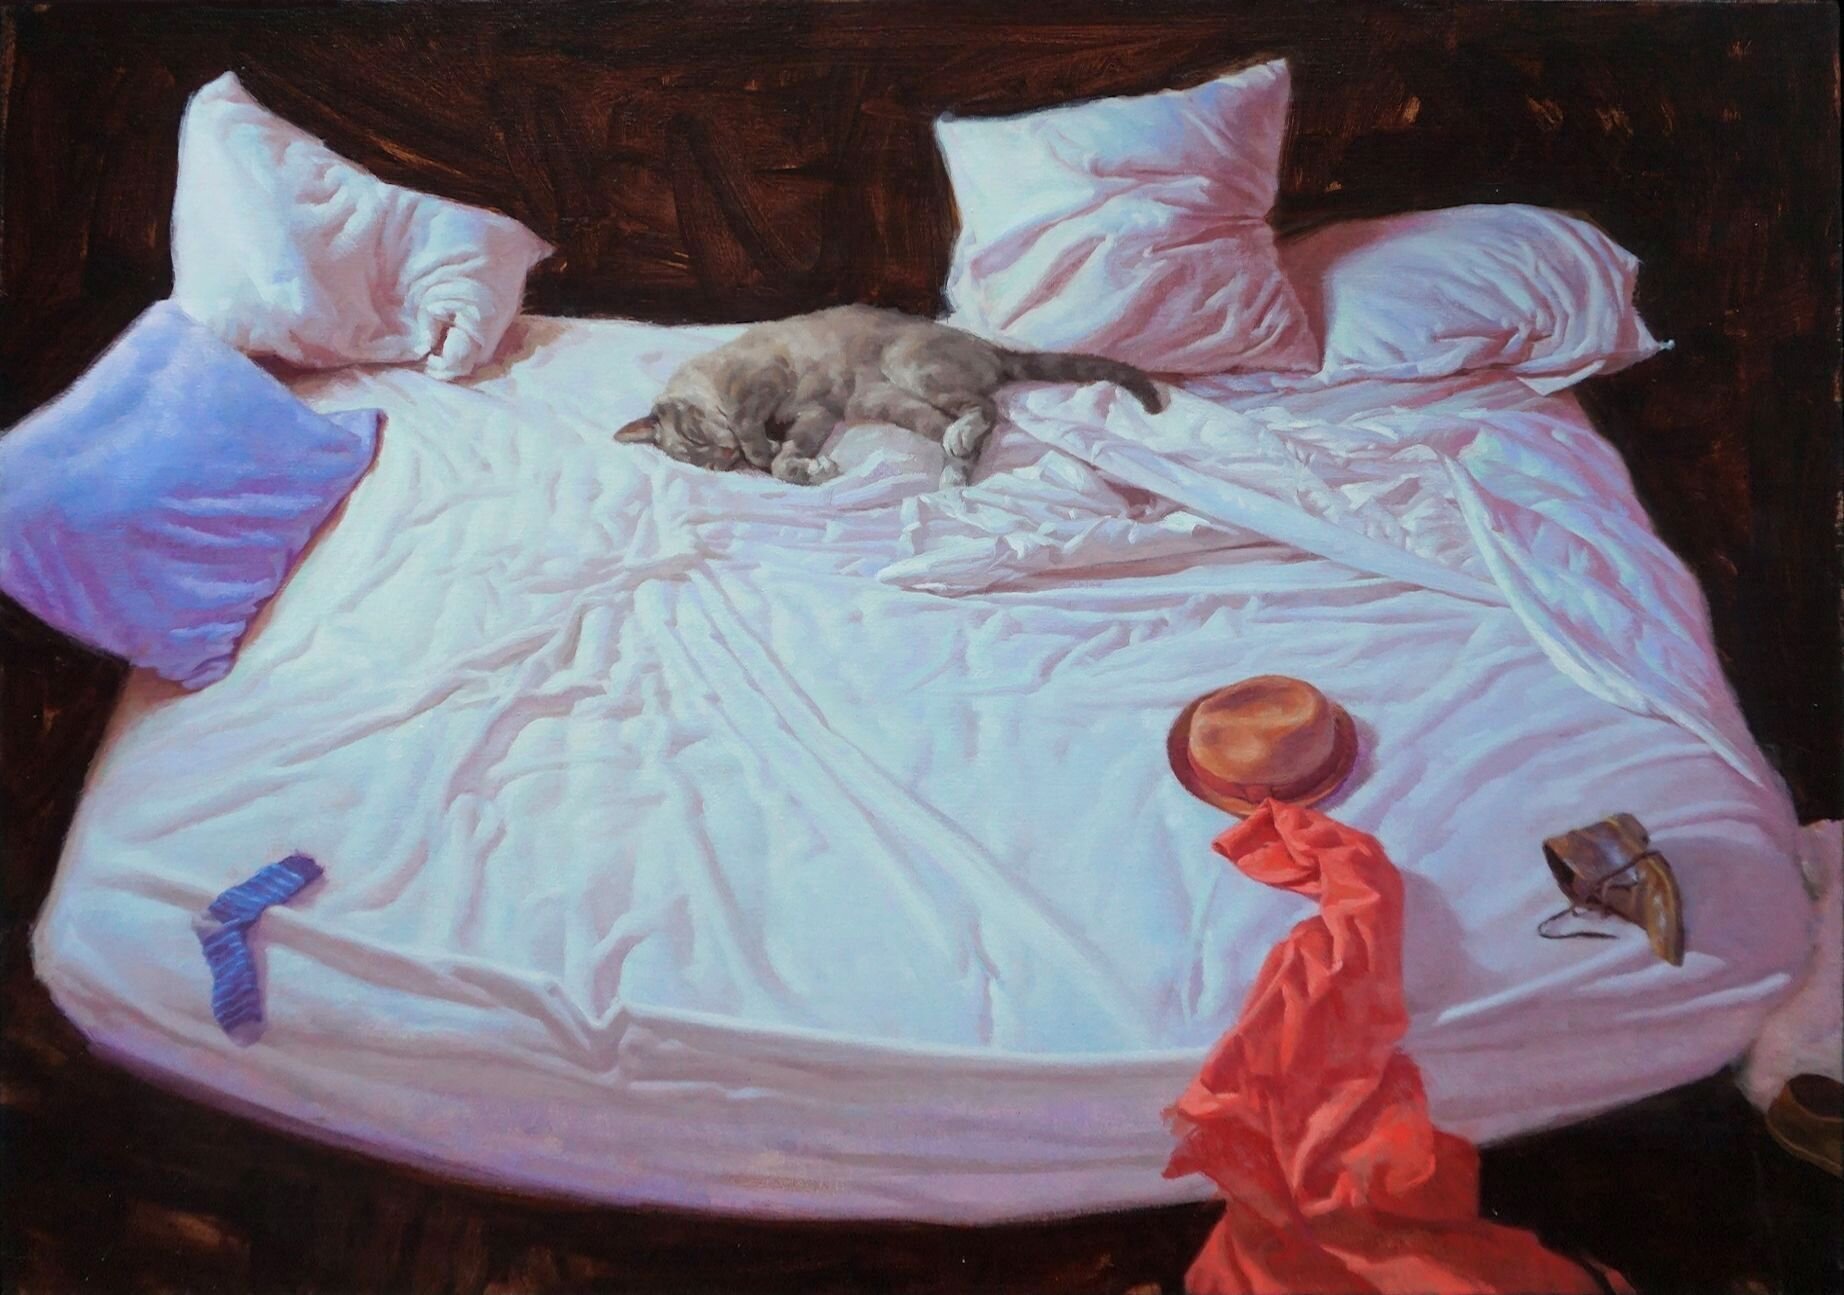 Artist's bed